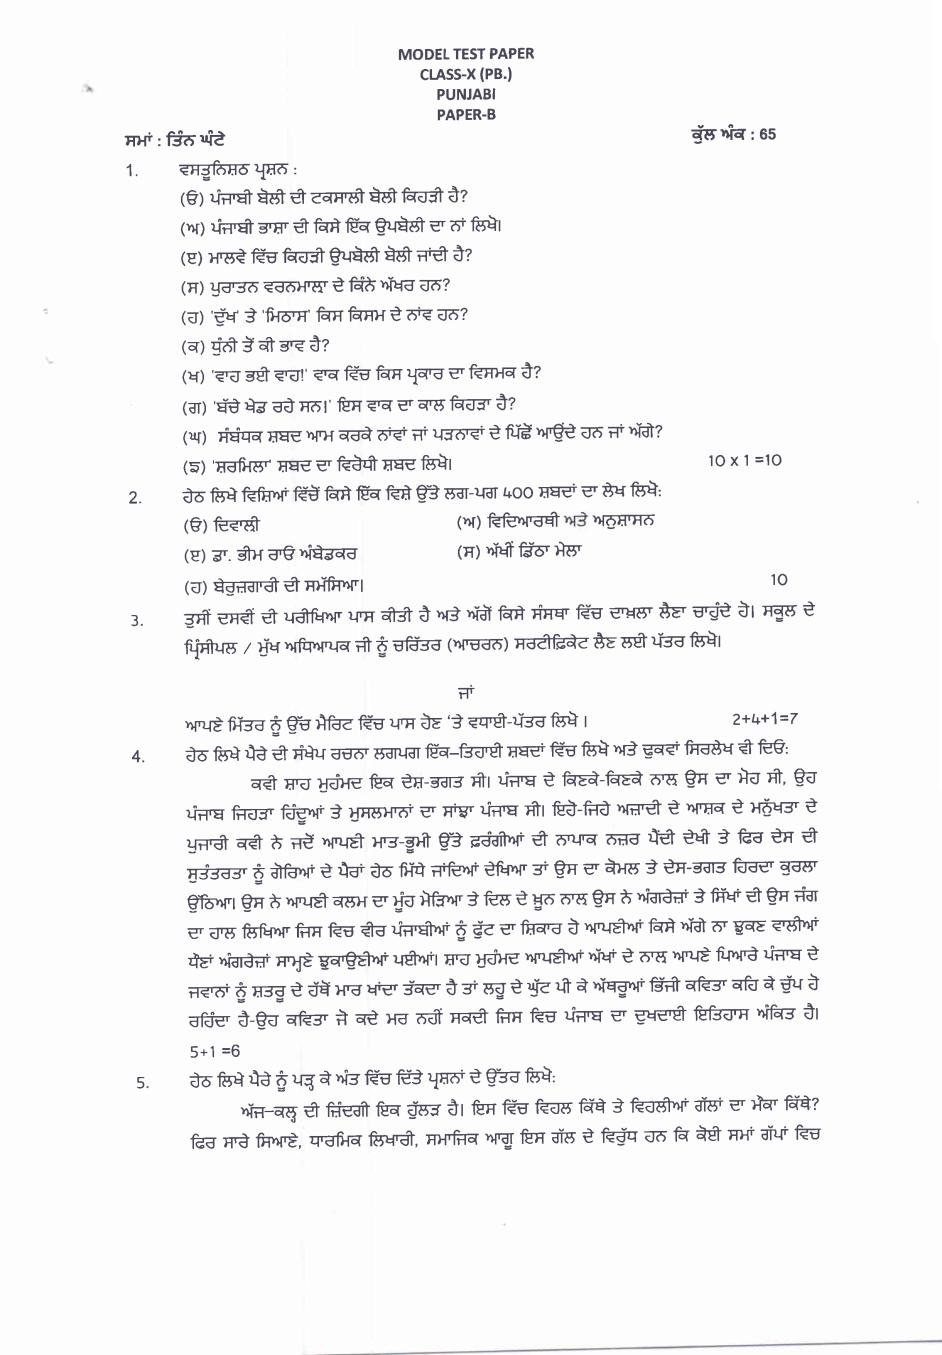 PSEB 10th Model Test Paper of Punjabi (Paper-B) - Page 1